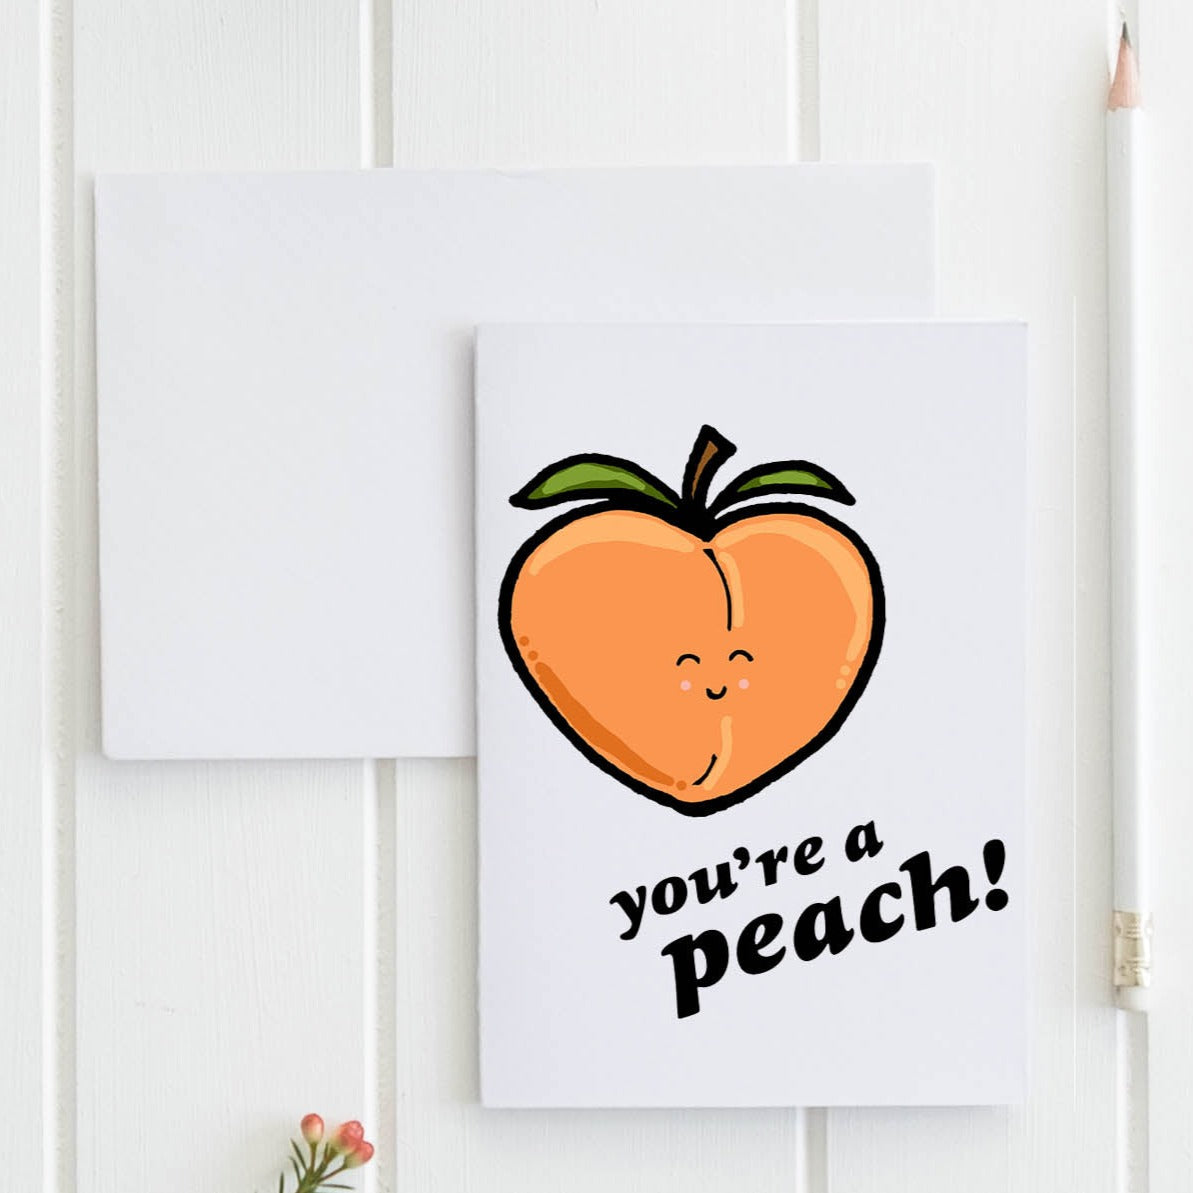 SALE - You're a Peach - Greeting Card